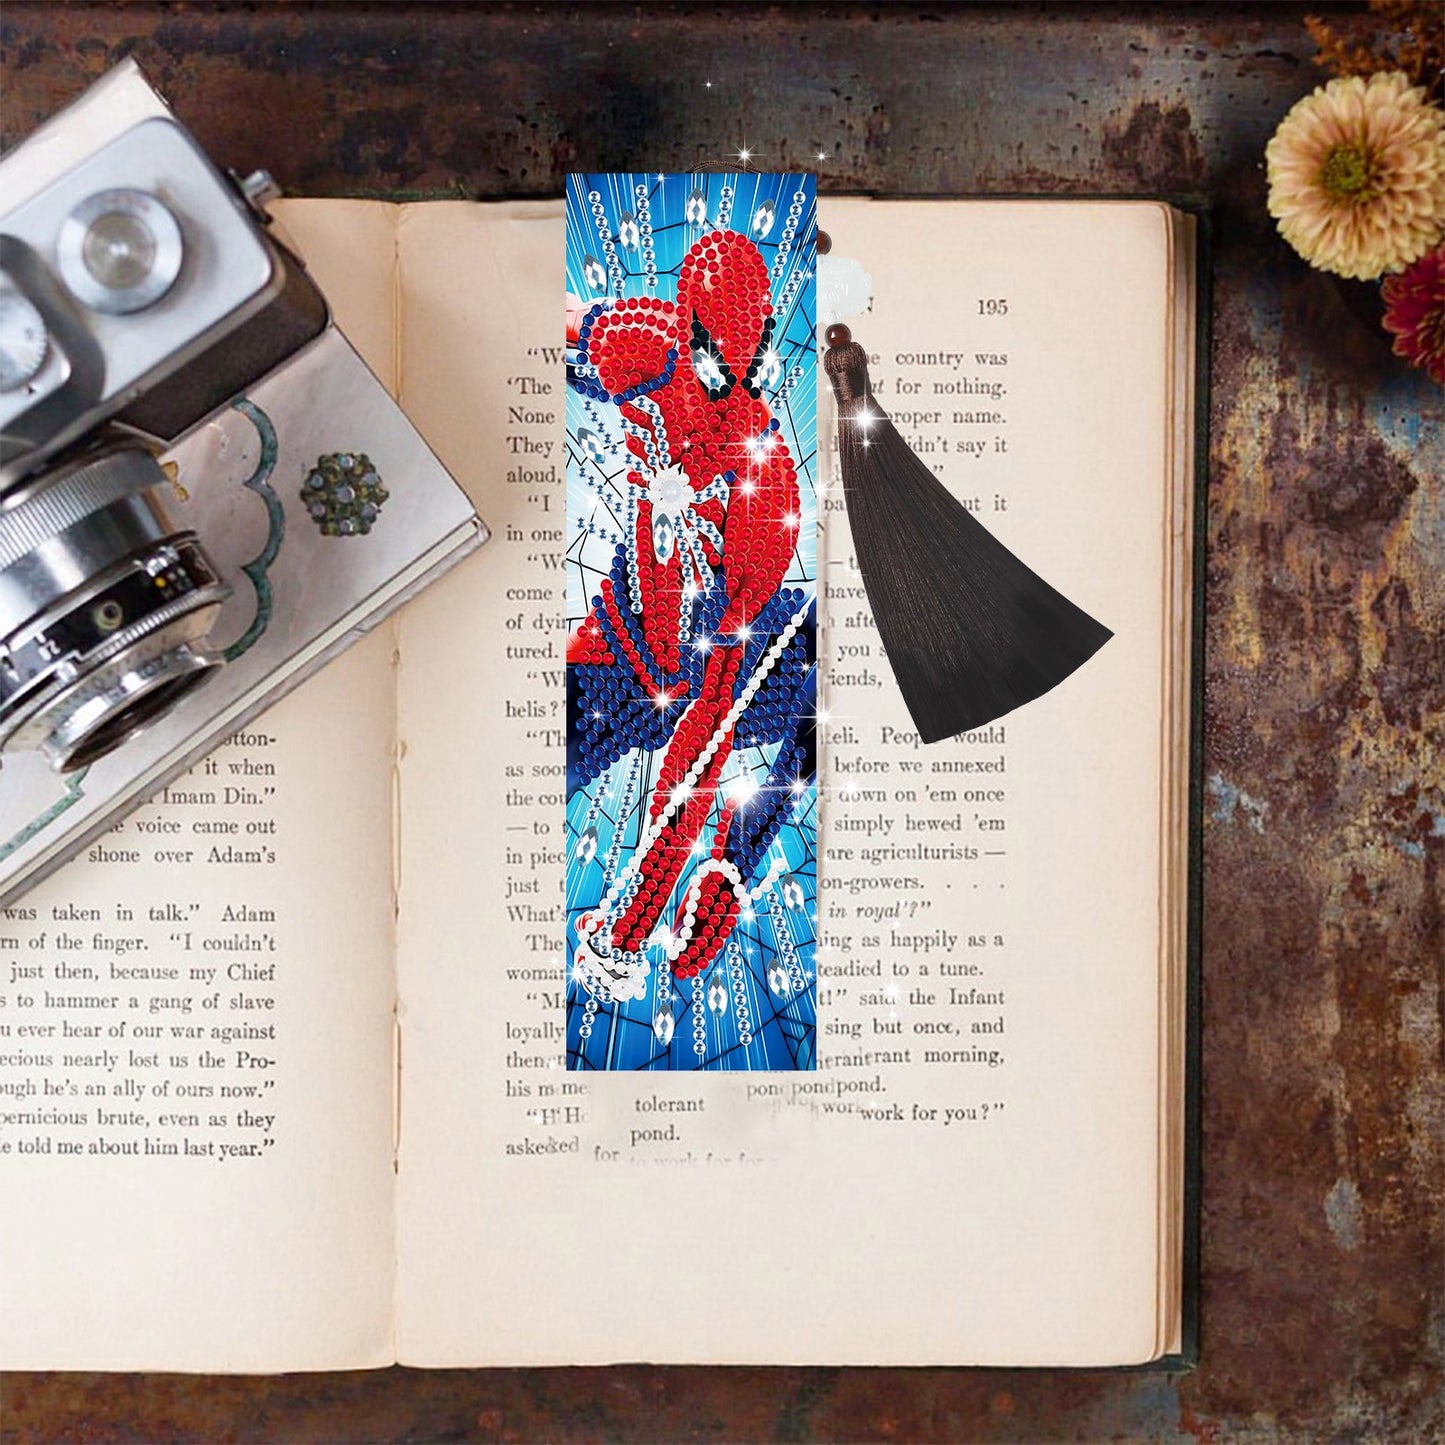 DIY Special Shaped Diamond Painting Leather Bookmark Tassel | Spiderman